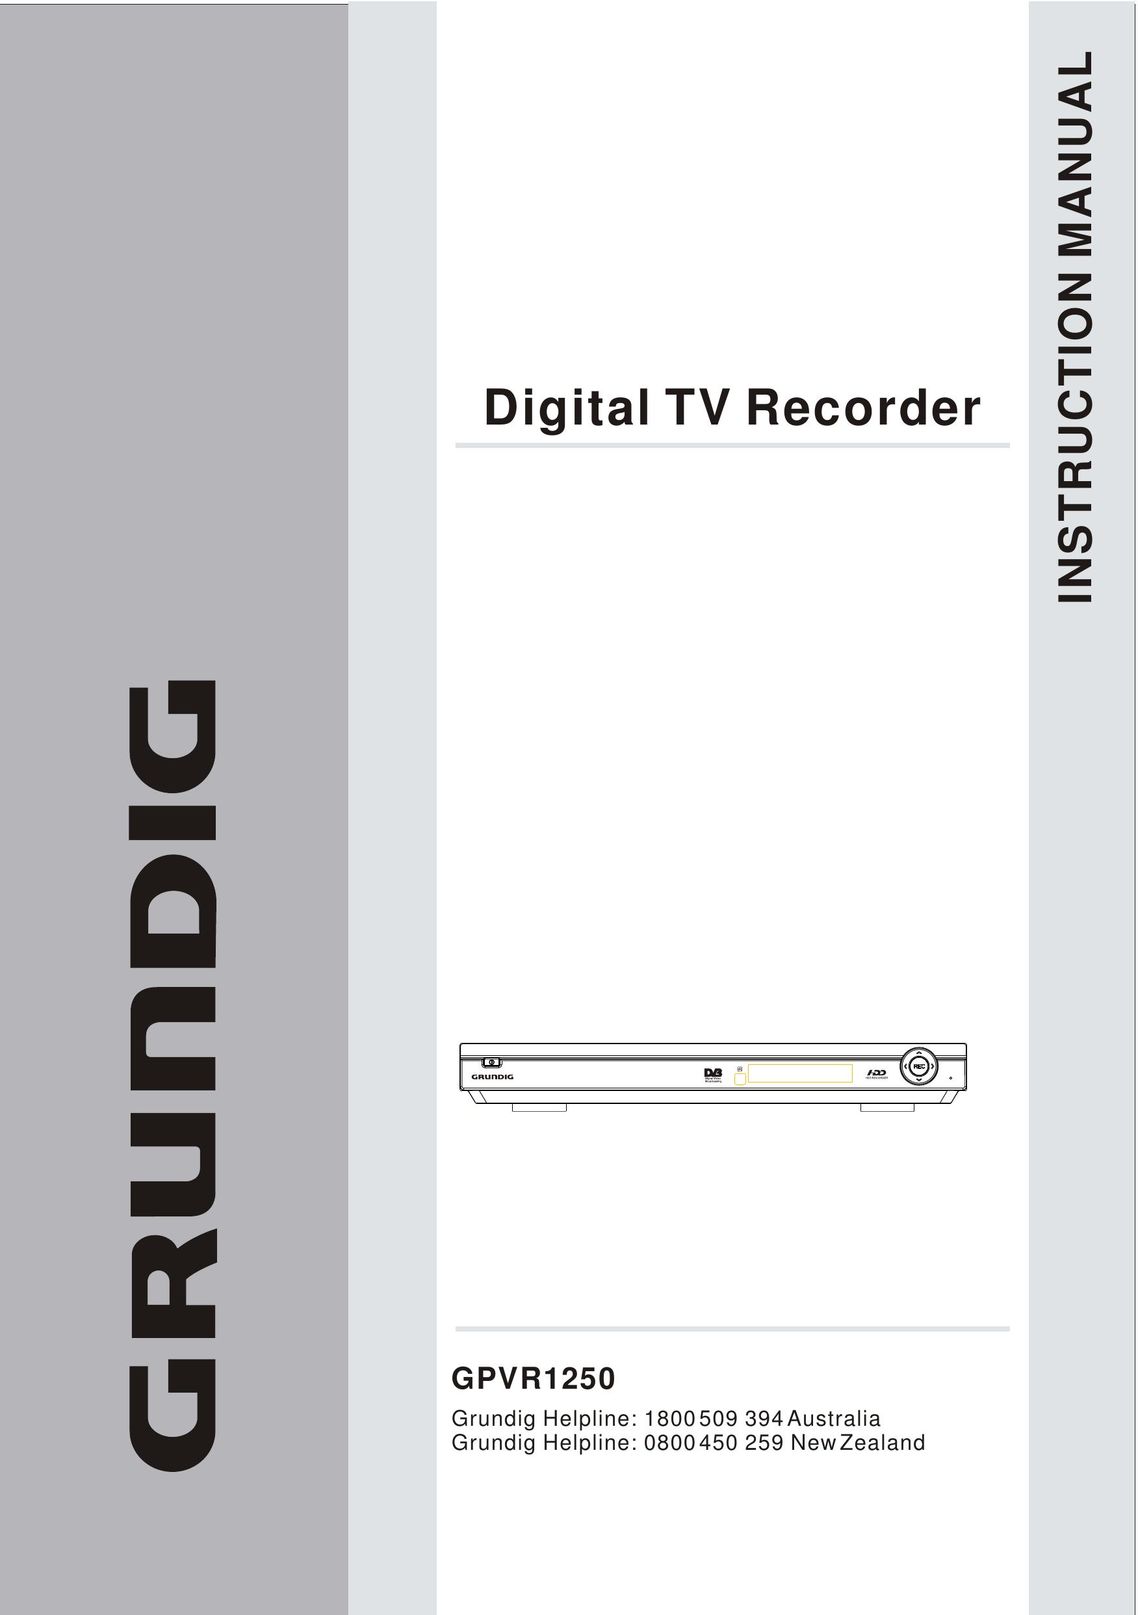 Grundig GPVR1250 DVR User Manual